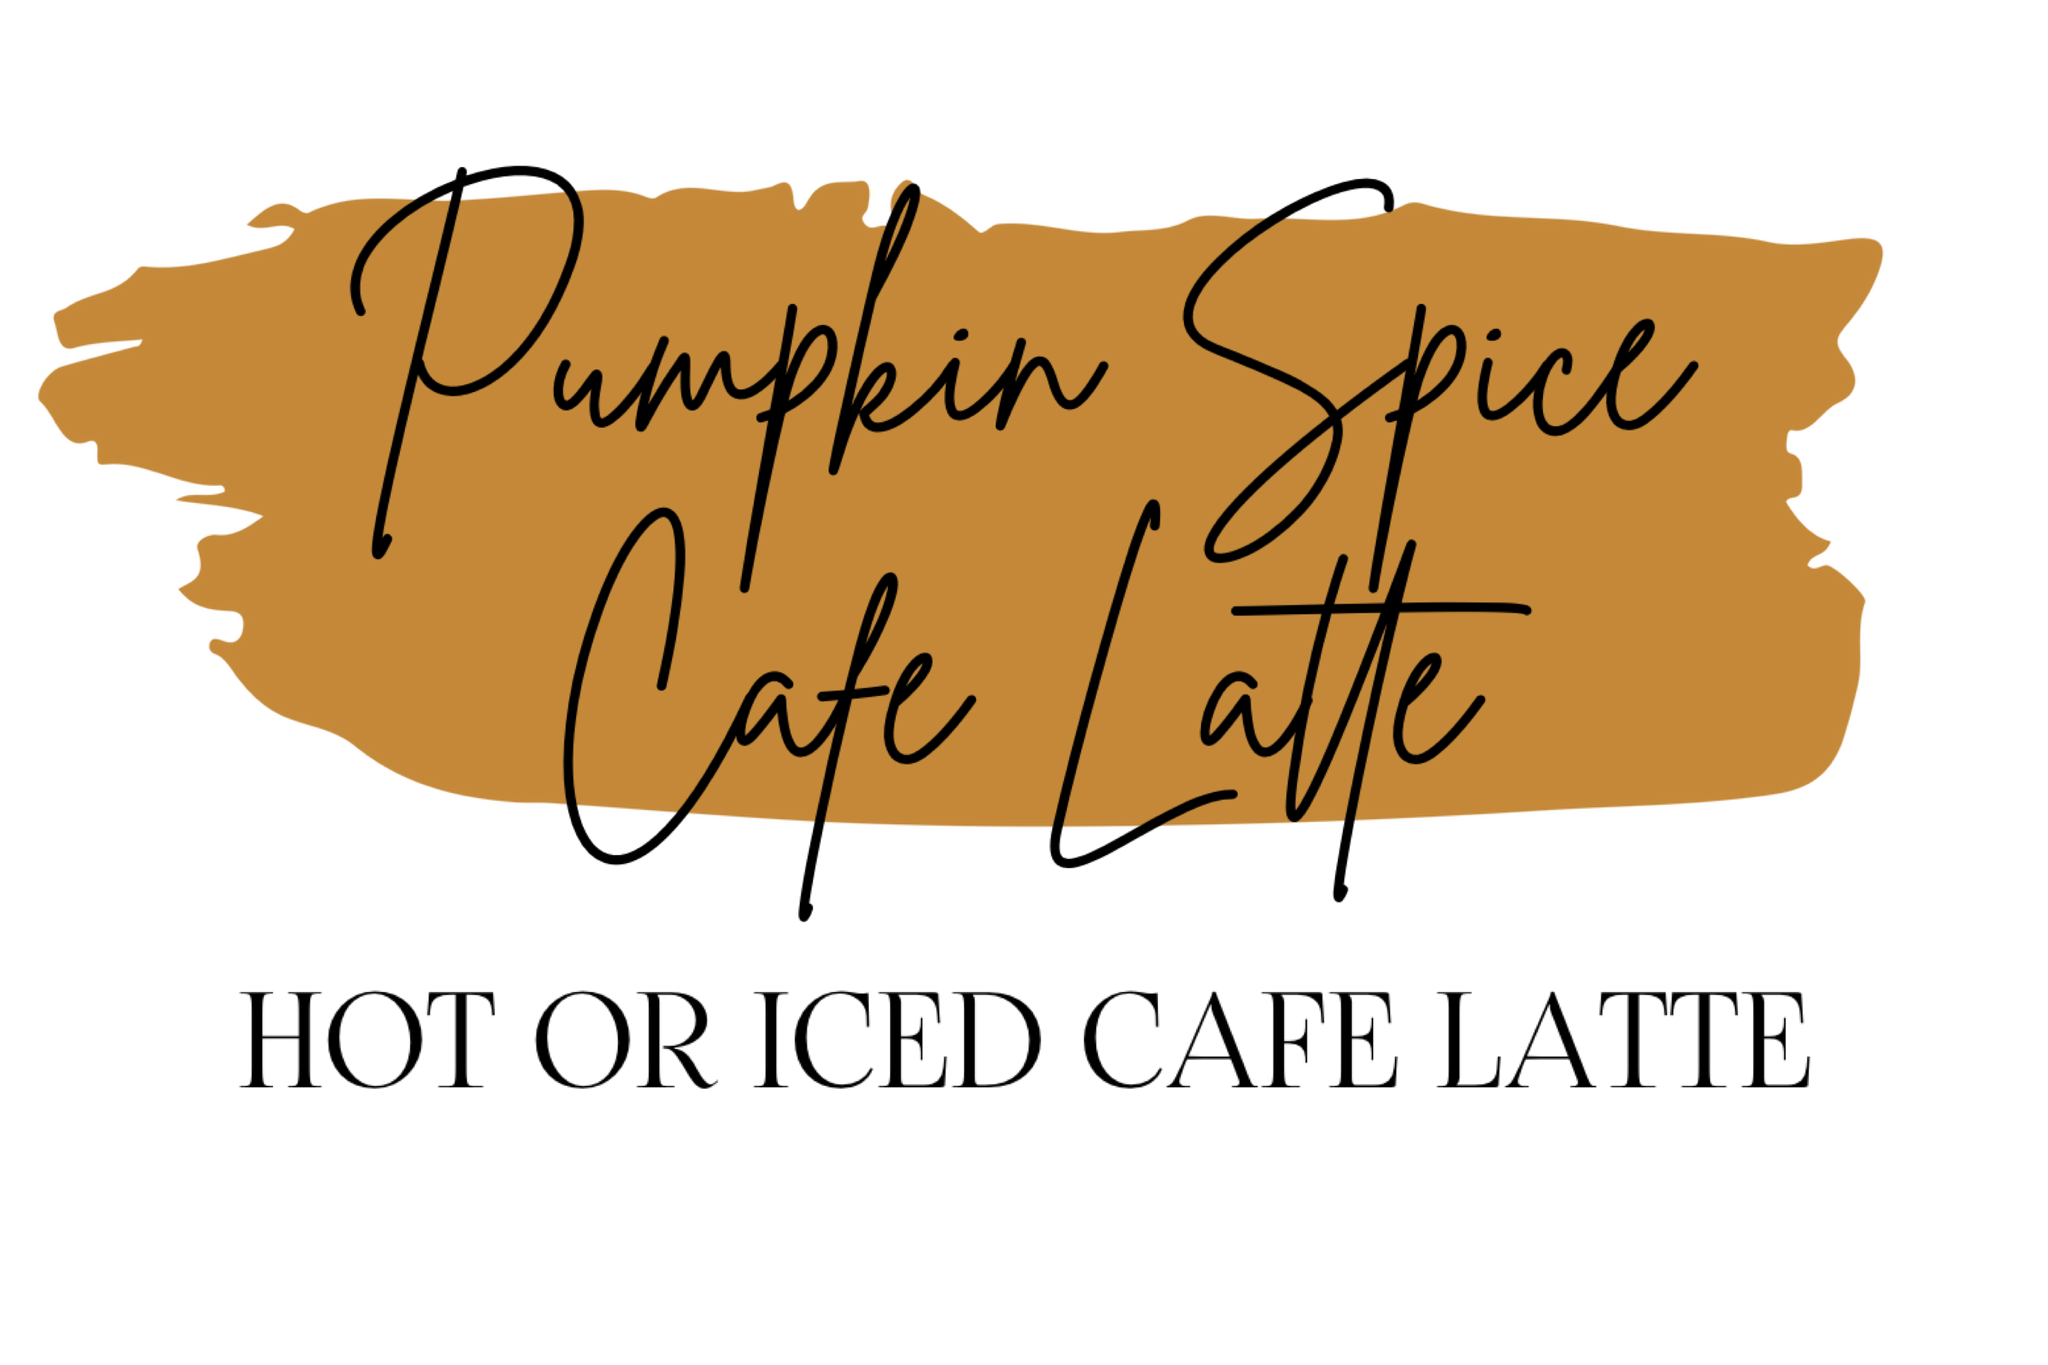 Pumpkin Spice Cafe Latte